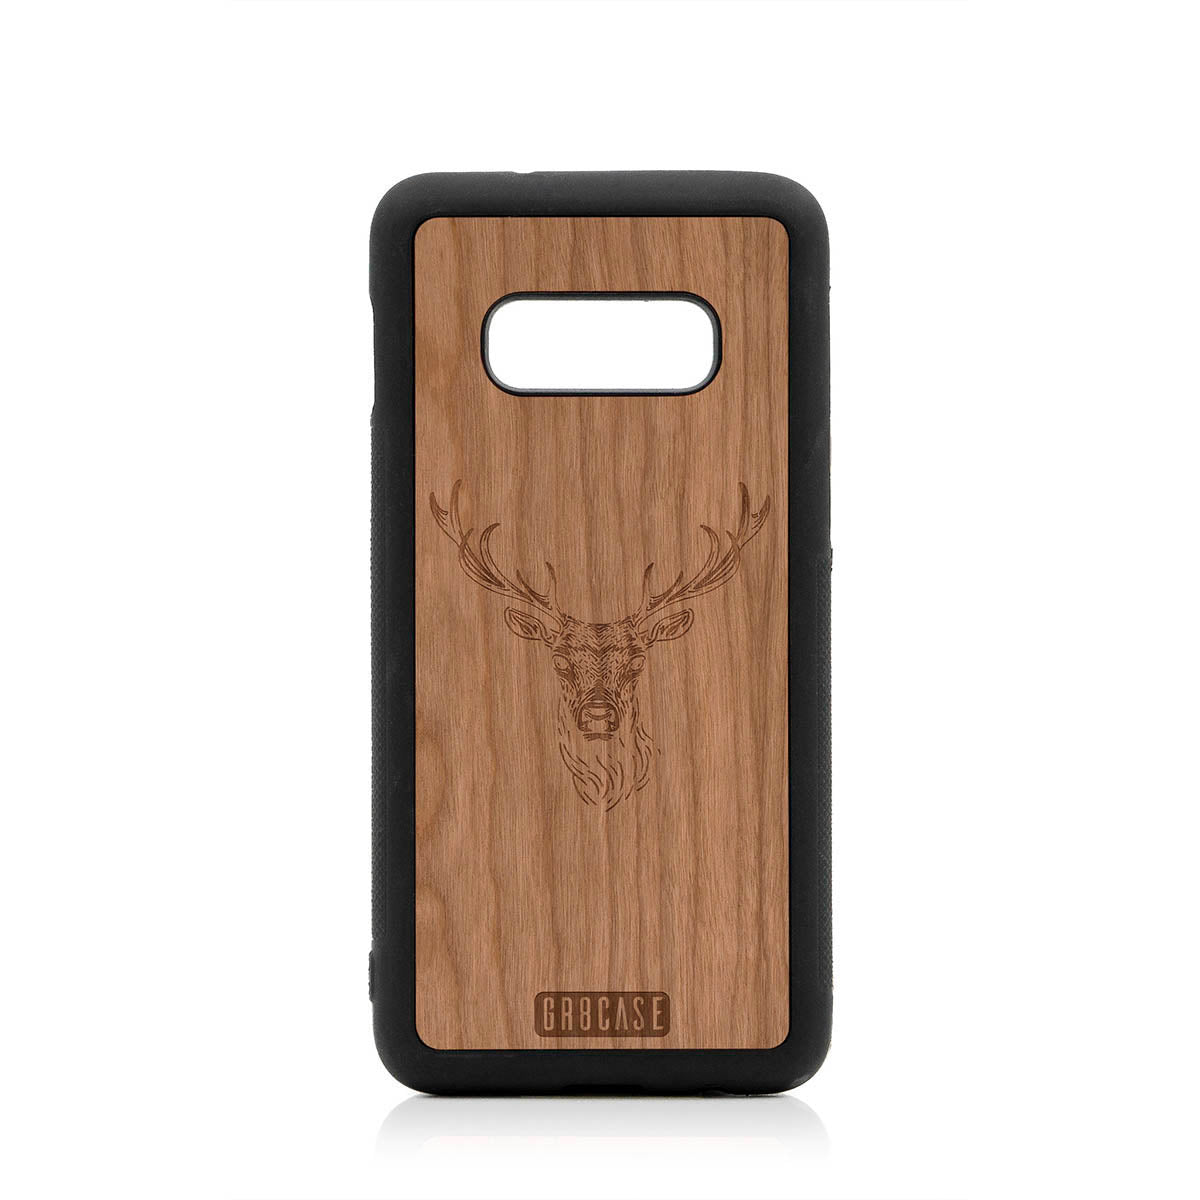 Elk Buck Design Wood Case For Samsung Galaxy S10E by GR8CASE